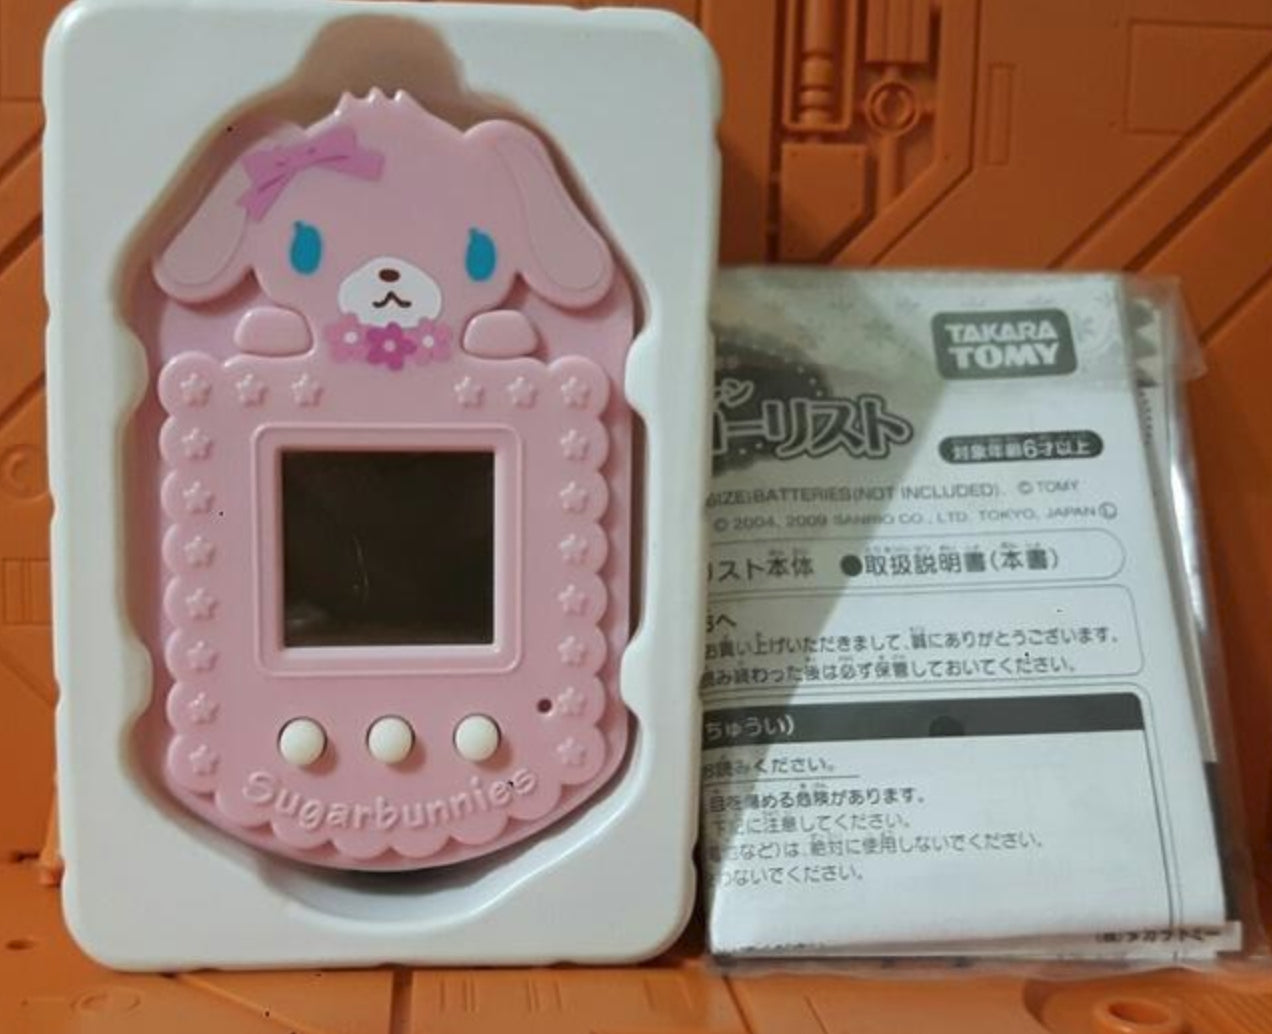 Takara Sugarbunnies Digital Pets Video Handheld Figure Used